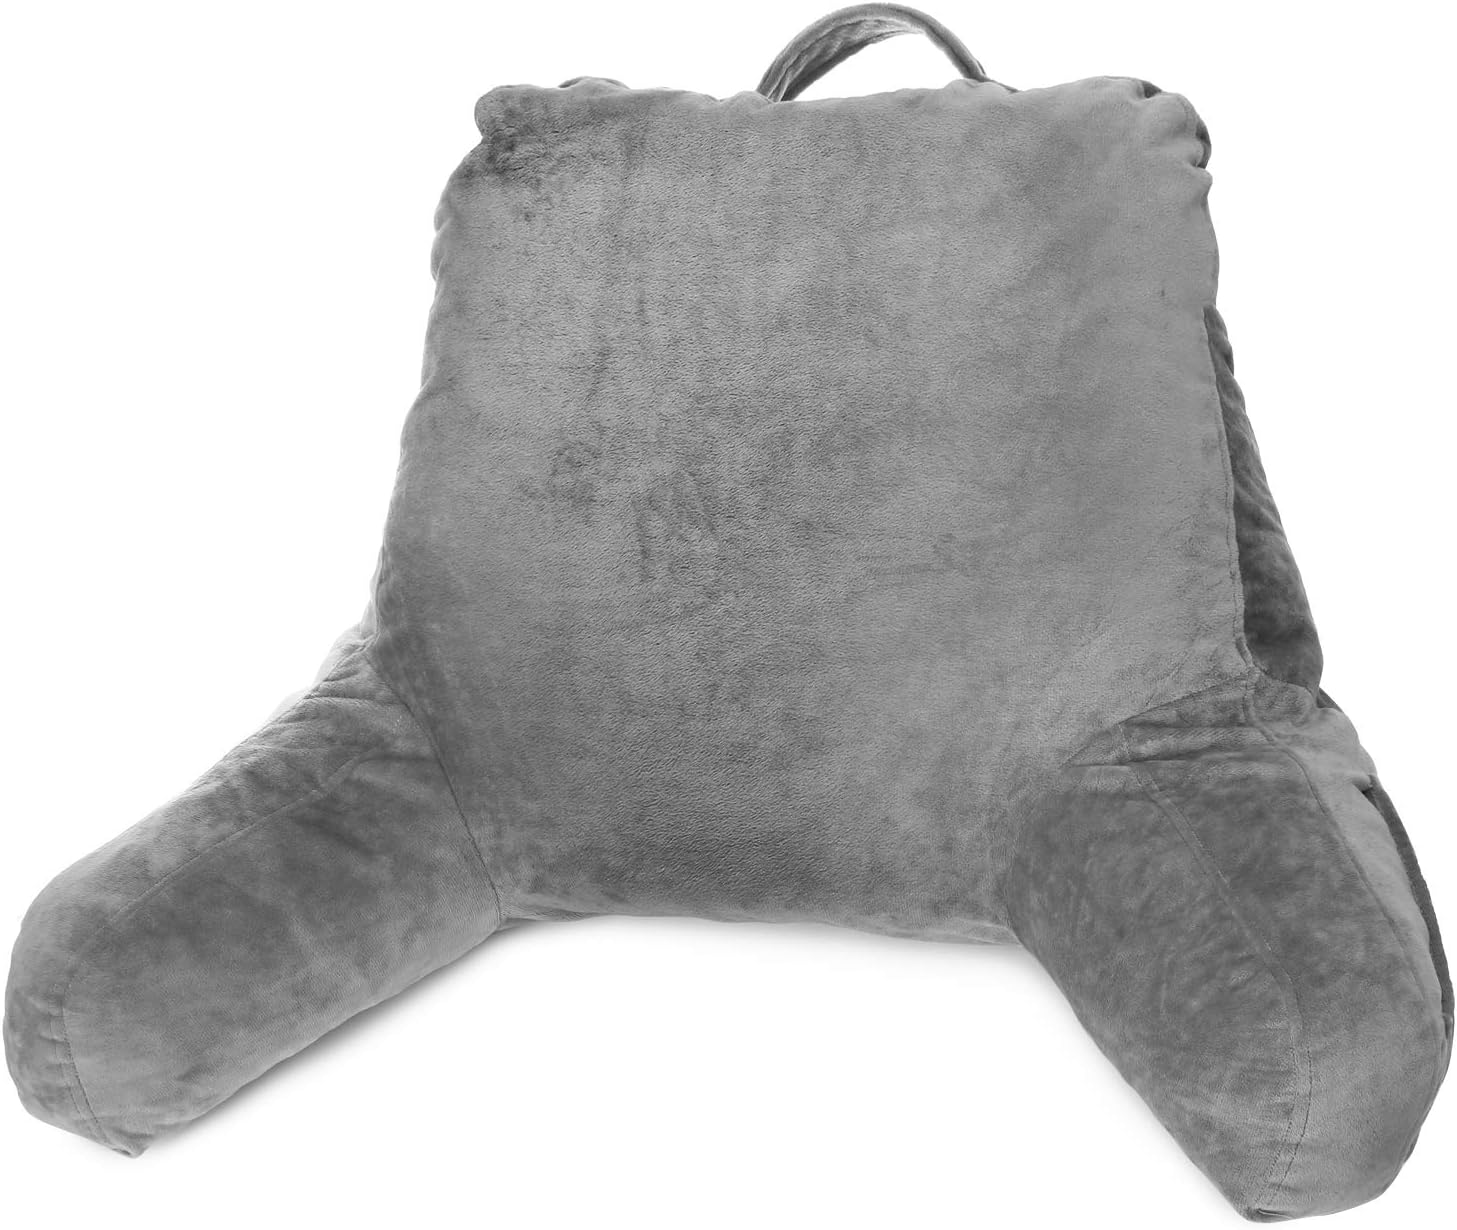 gray reading pillow